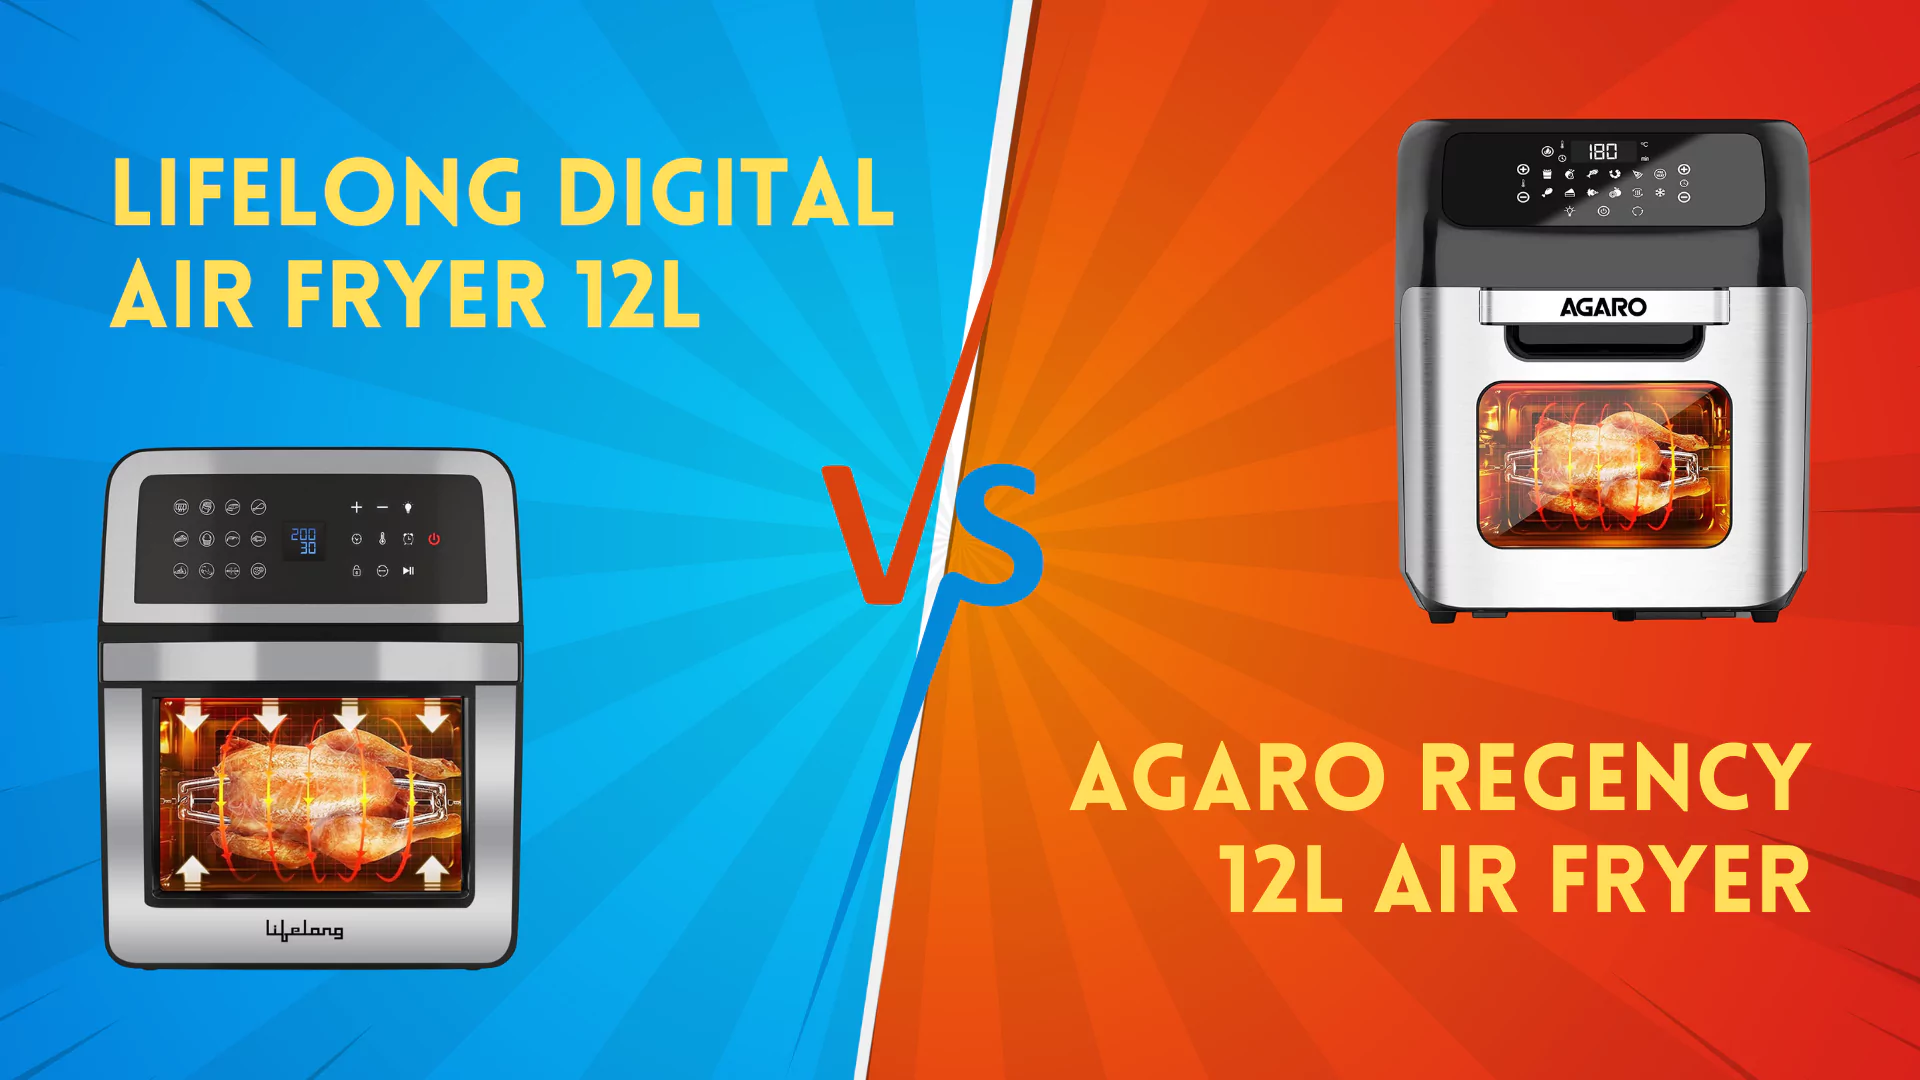 Lifelong Digital Air Fryer Toaster Oven 12L Vs AGARO Regency 12L Air Fryer - Which is Better